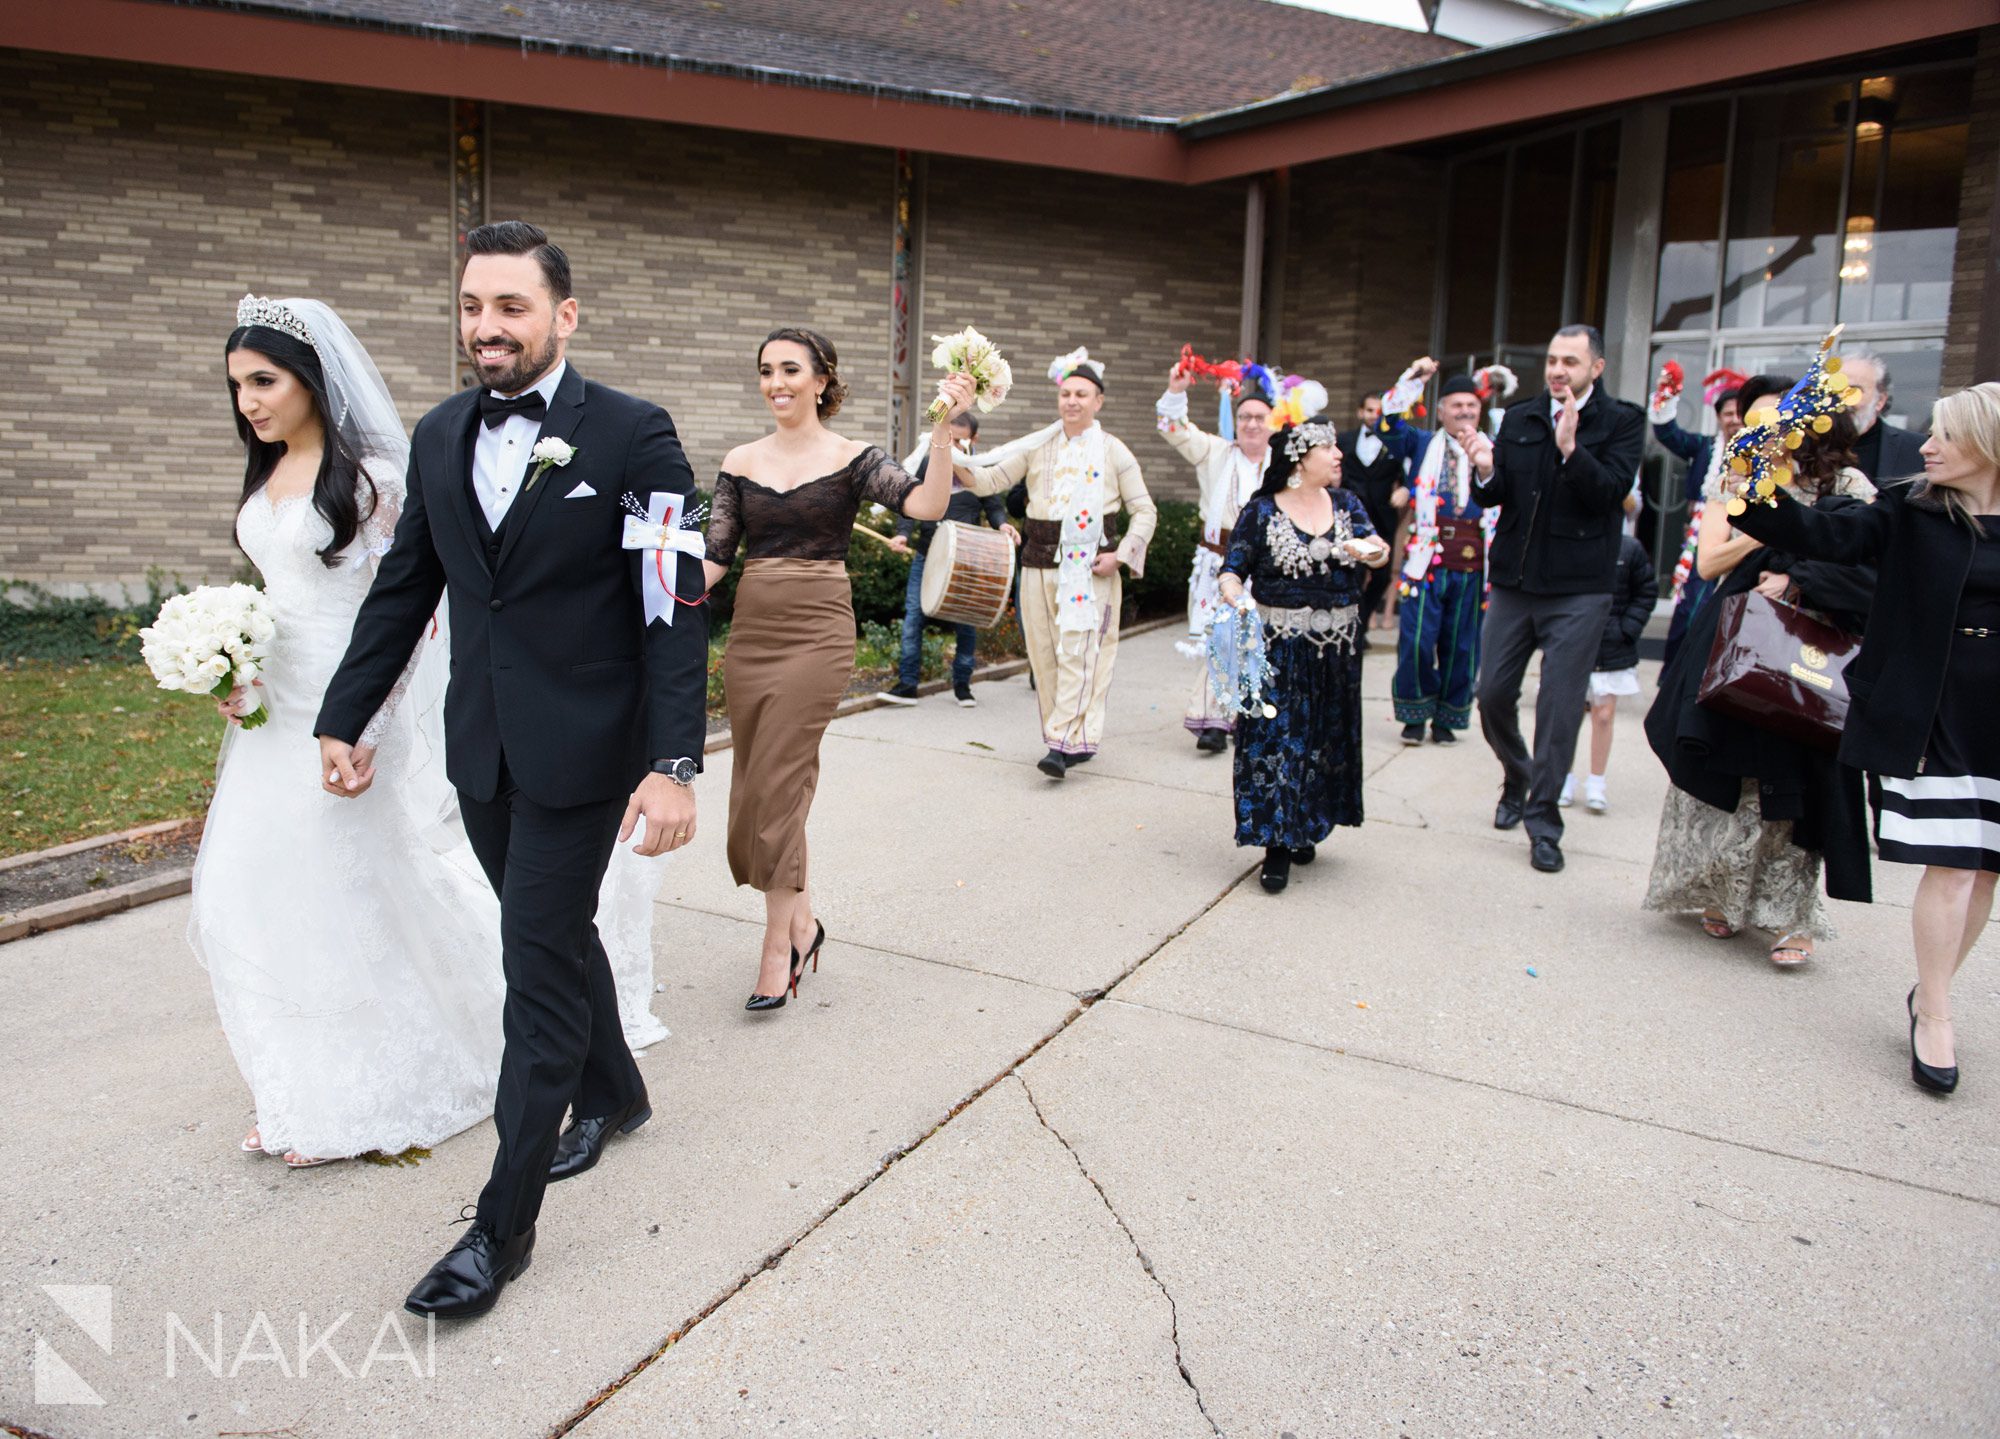 assyrian wedding traditions ceremony photos 